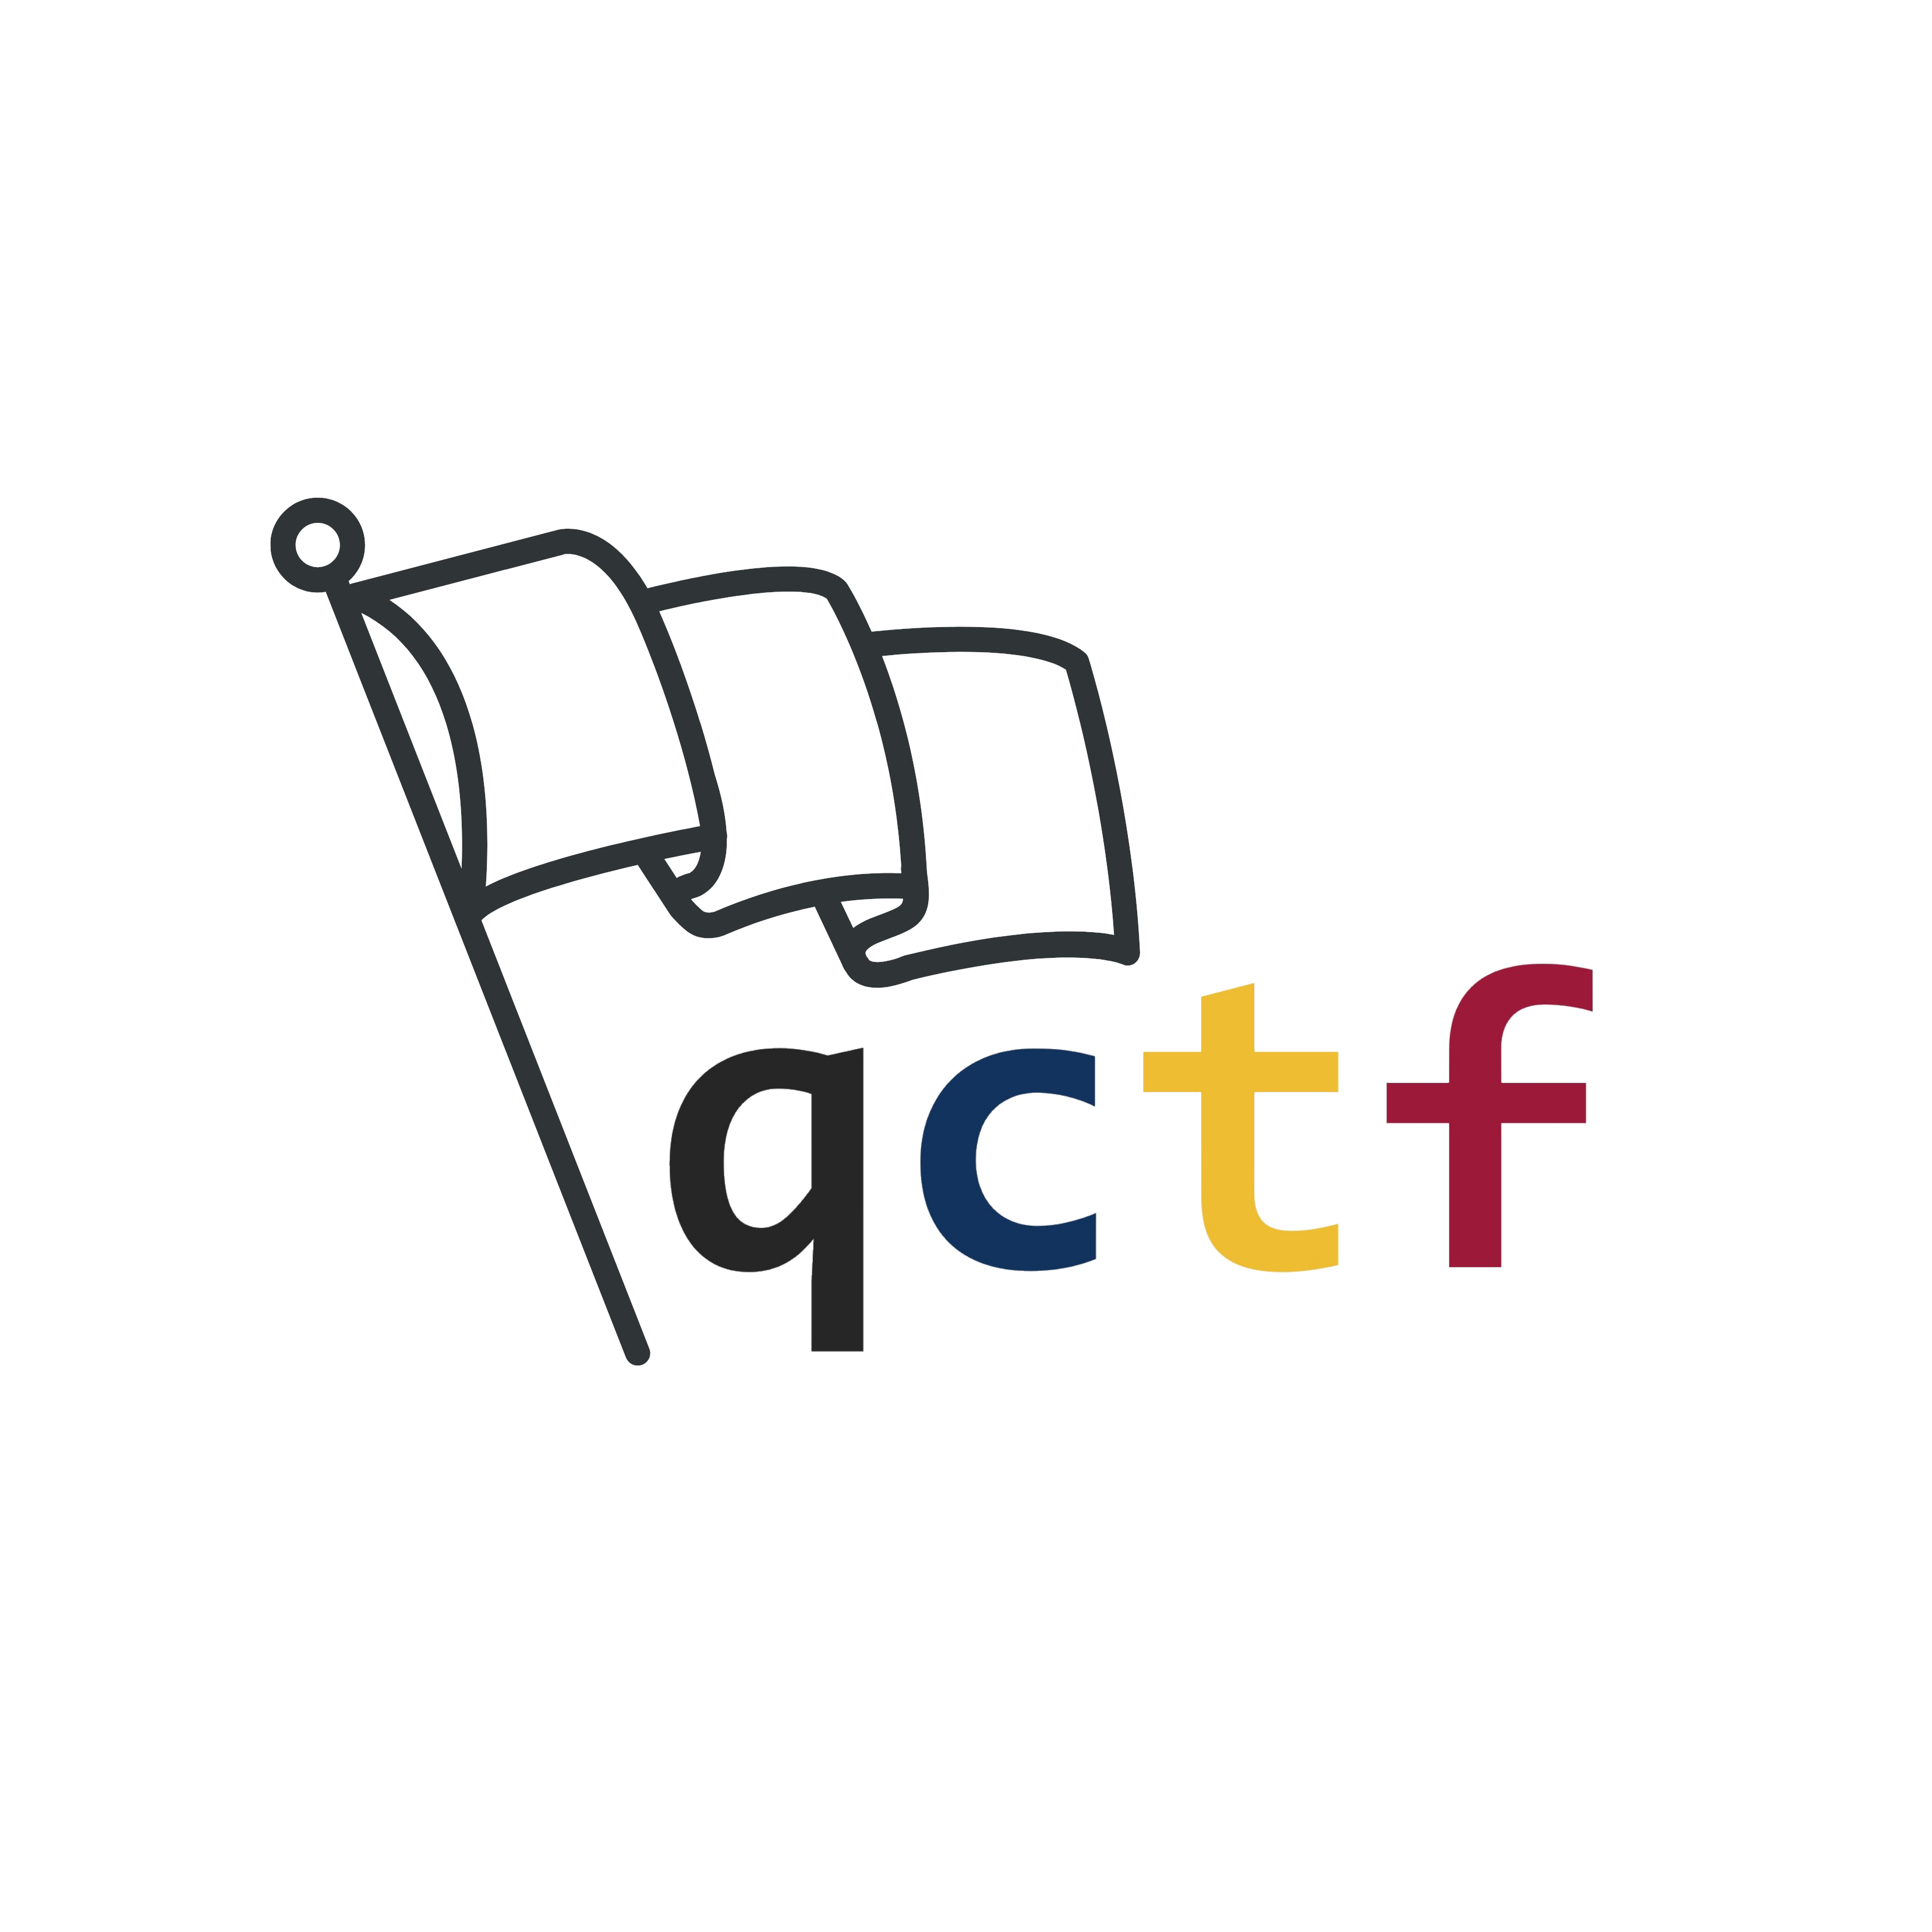 QCTF logo